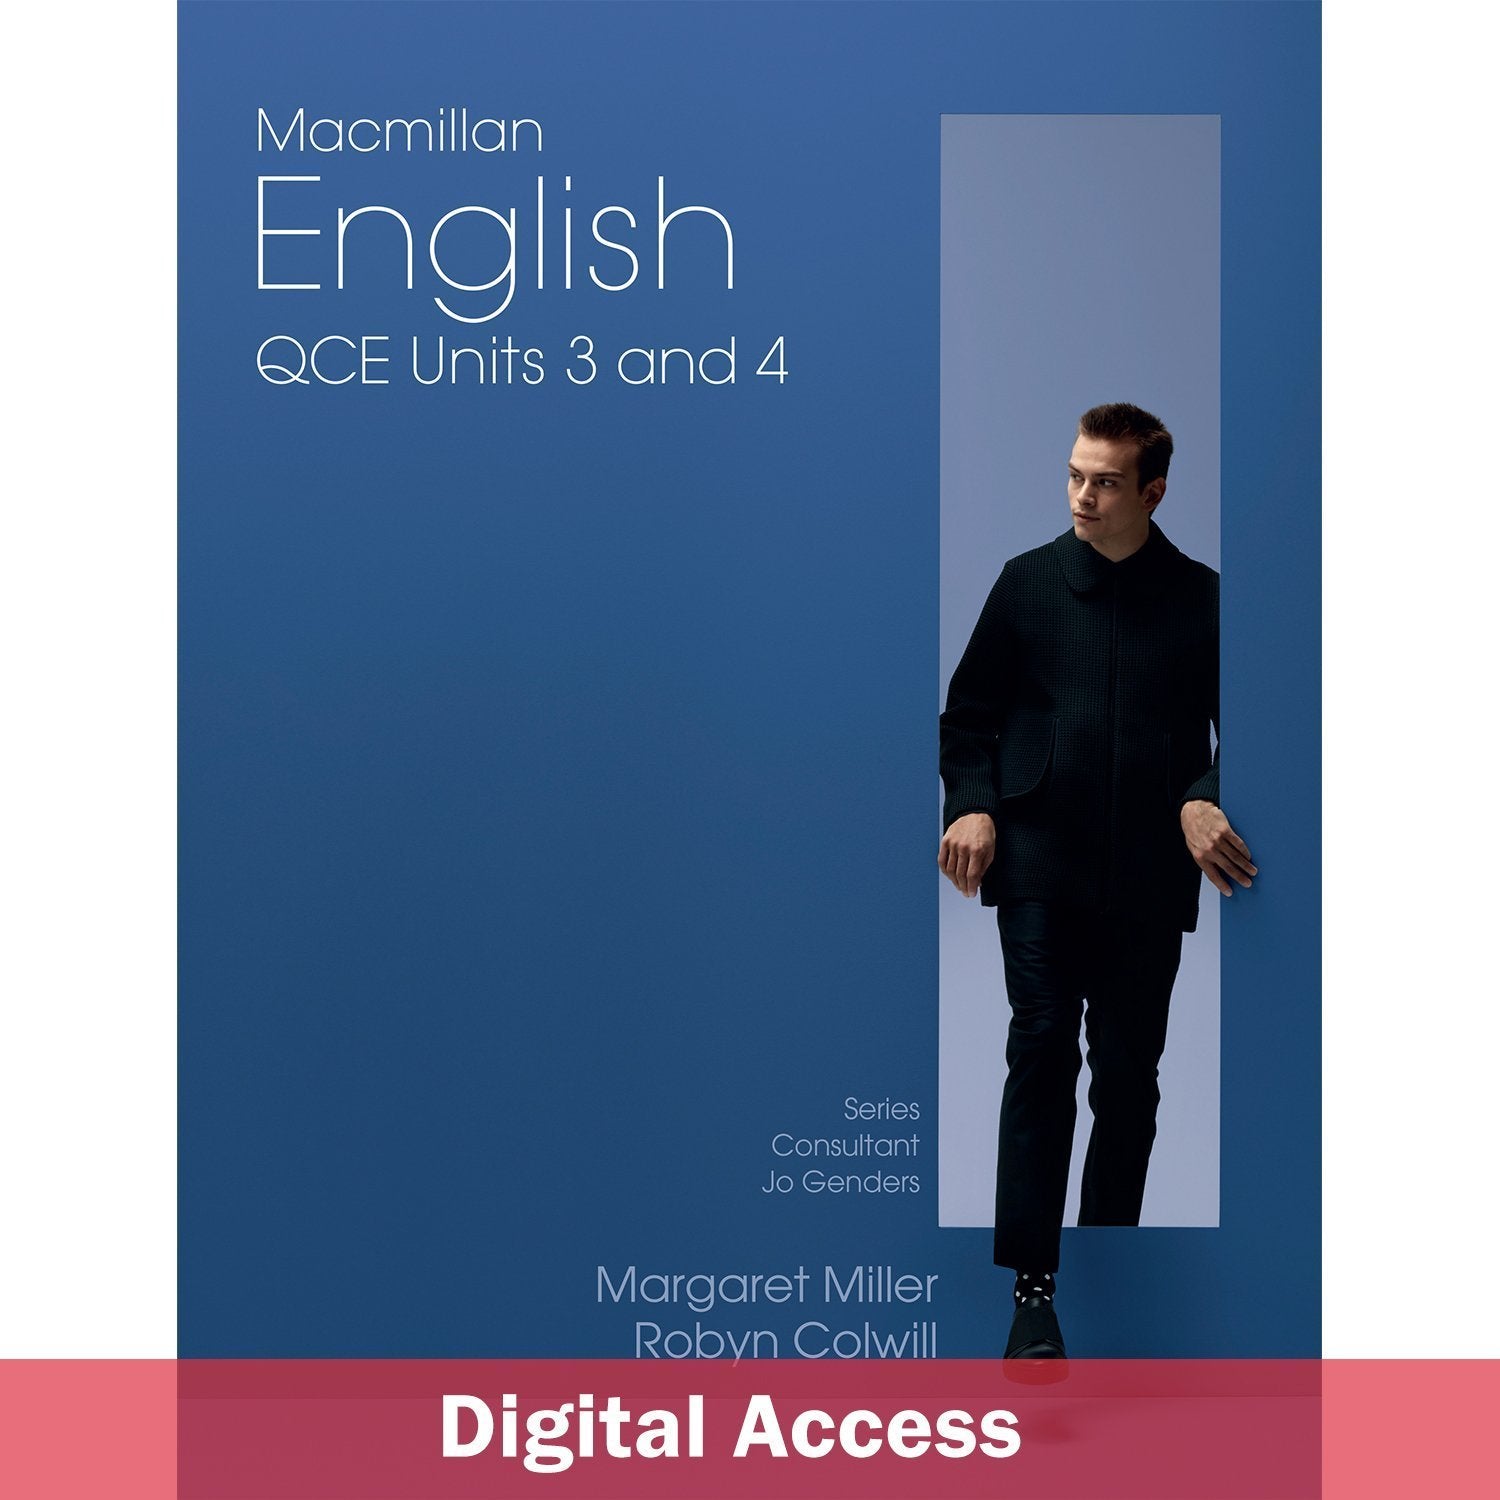 Macmillan English QCE Units 3&4 Student Digital access